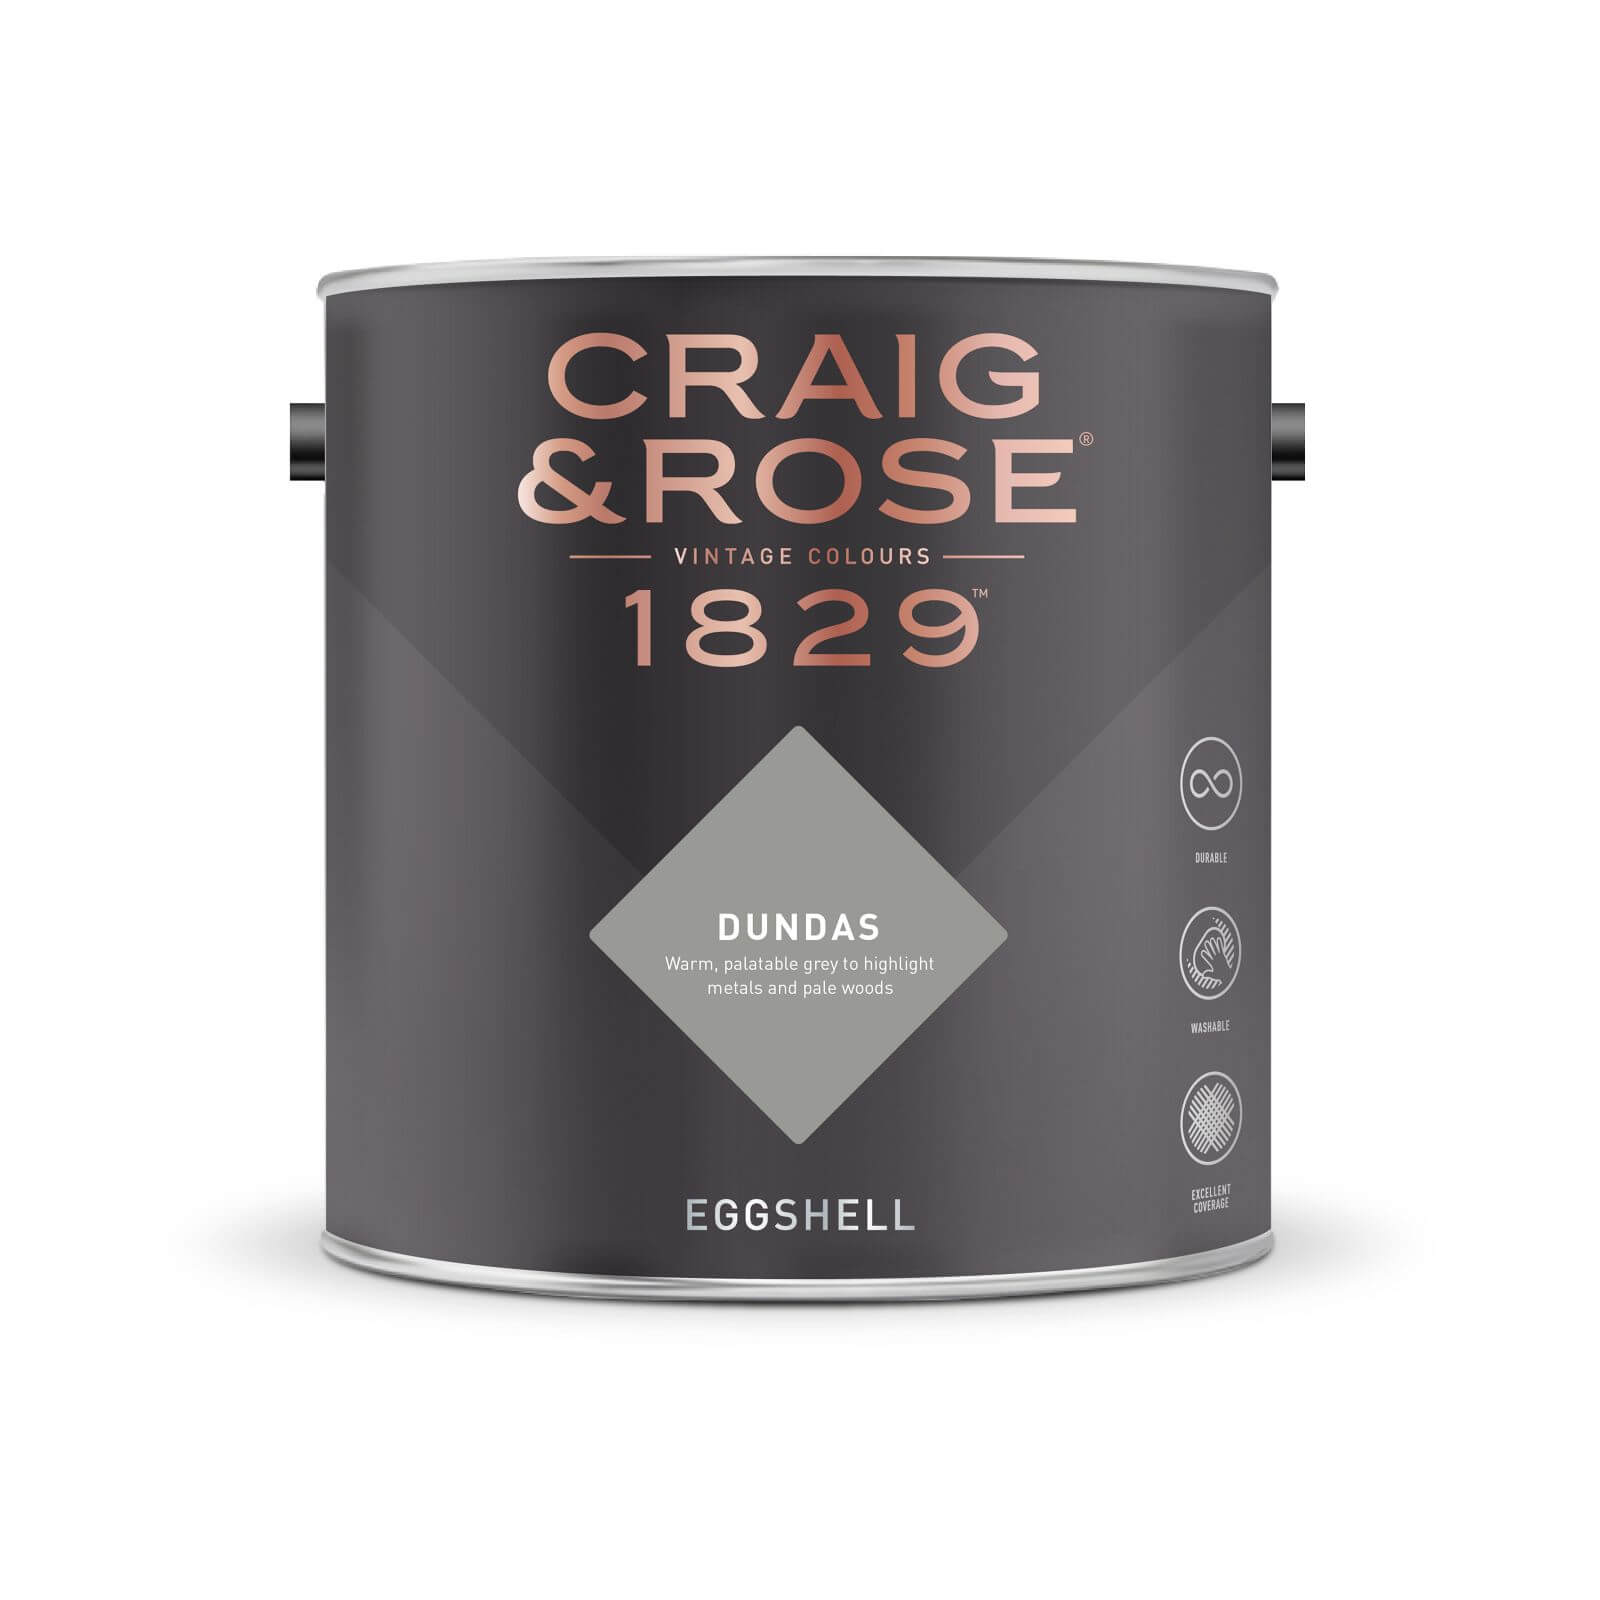 Craig & Rose 1829 Eggshell Paint Dundas - 2.5L